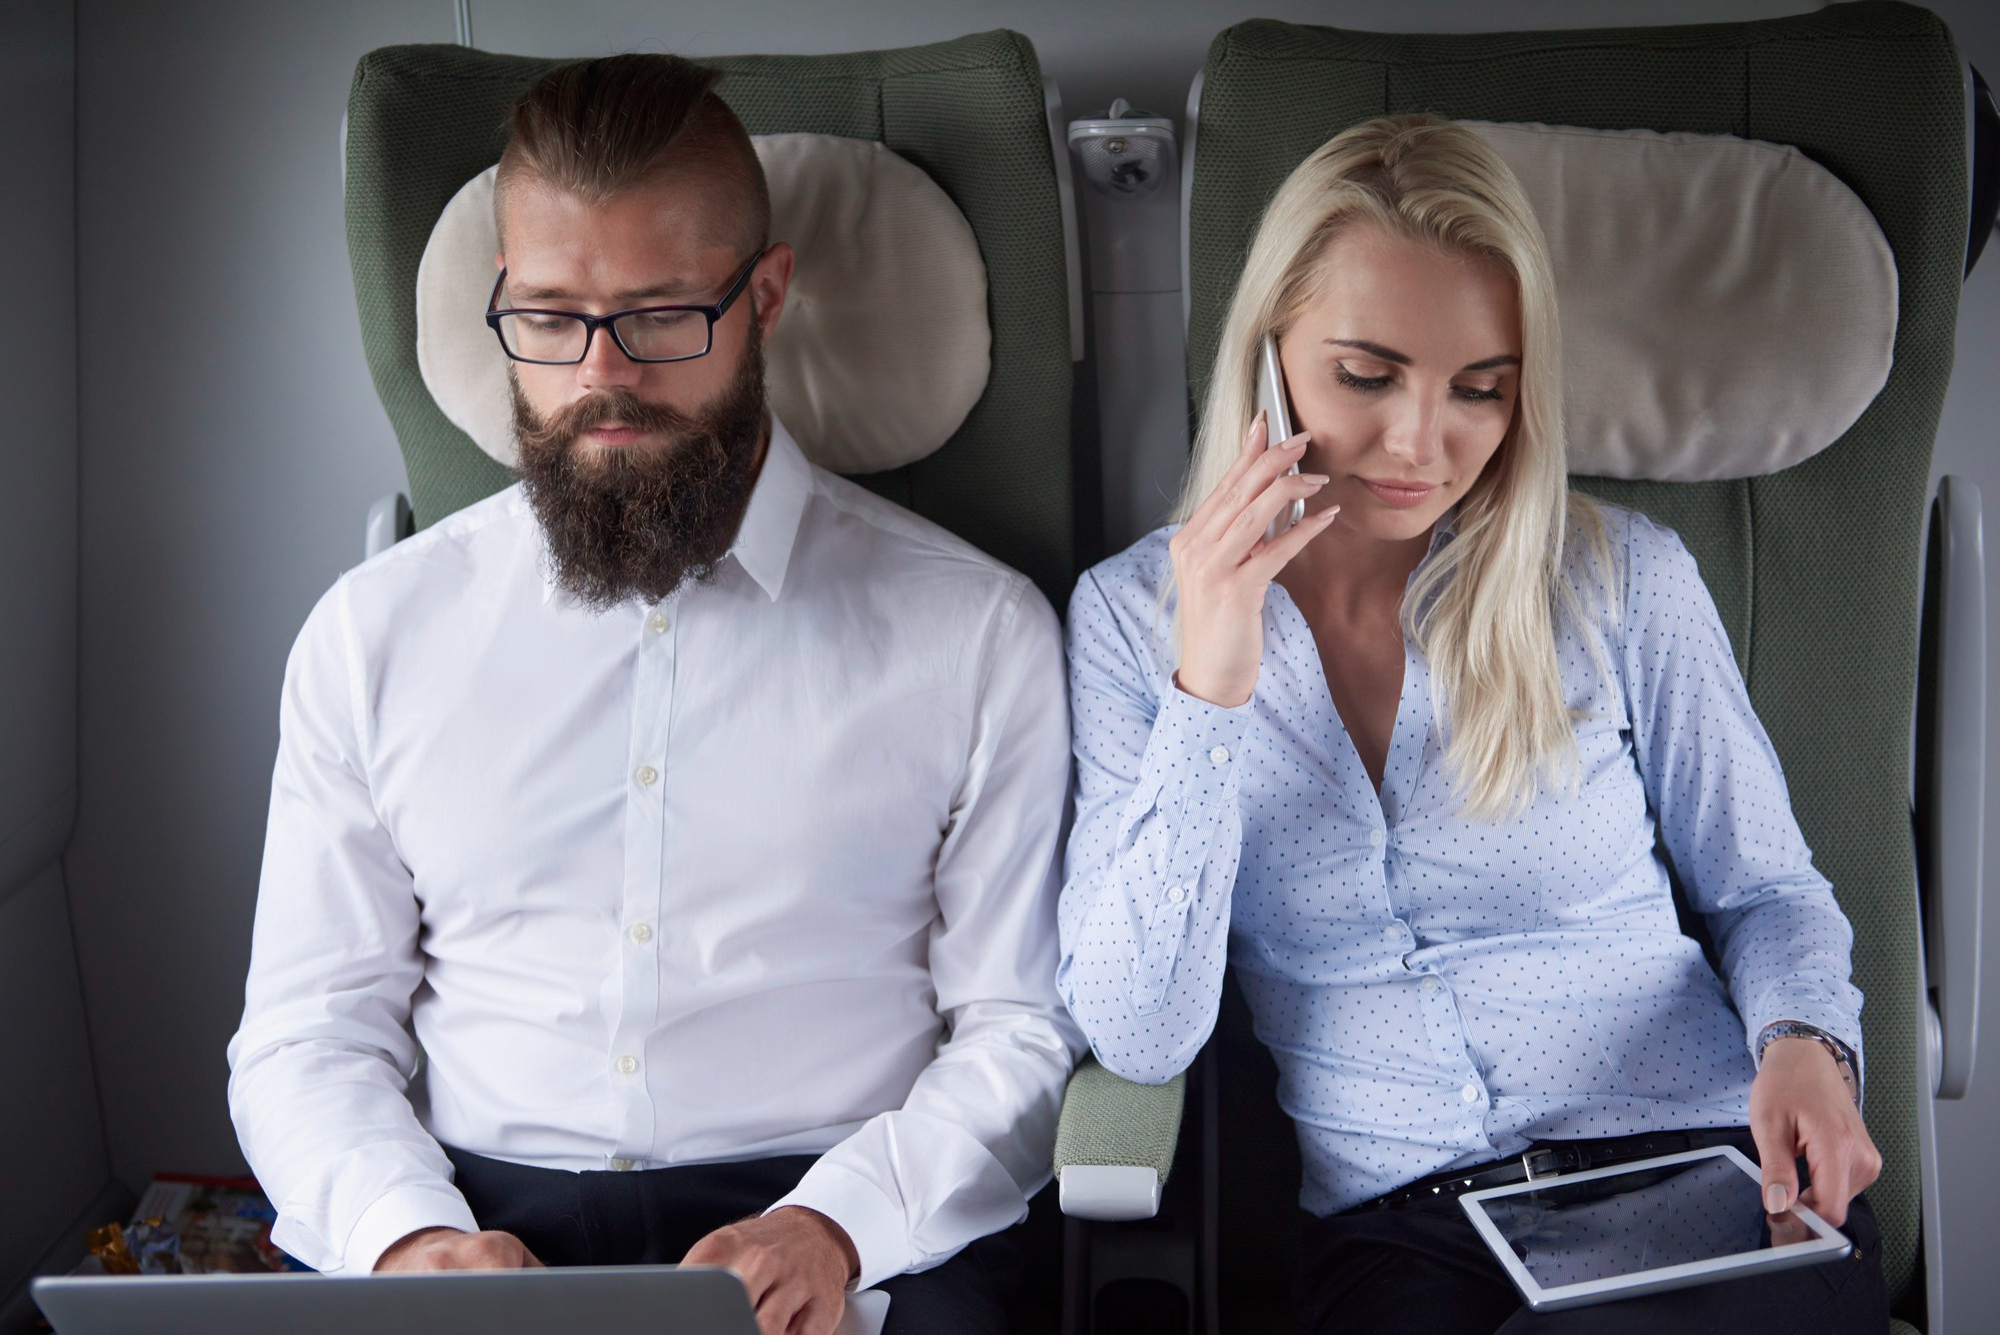 A woman talking on the phone sitting next to a man on a plane | Source: Freepik